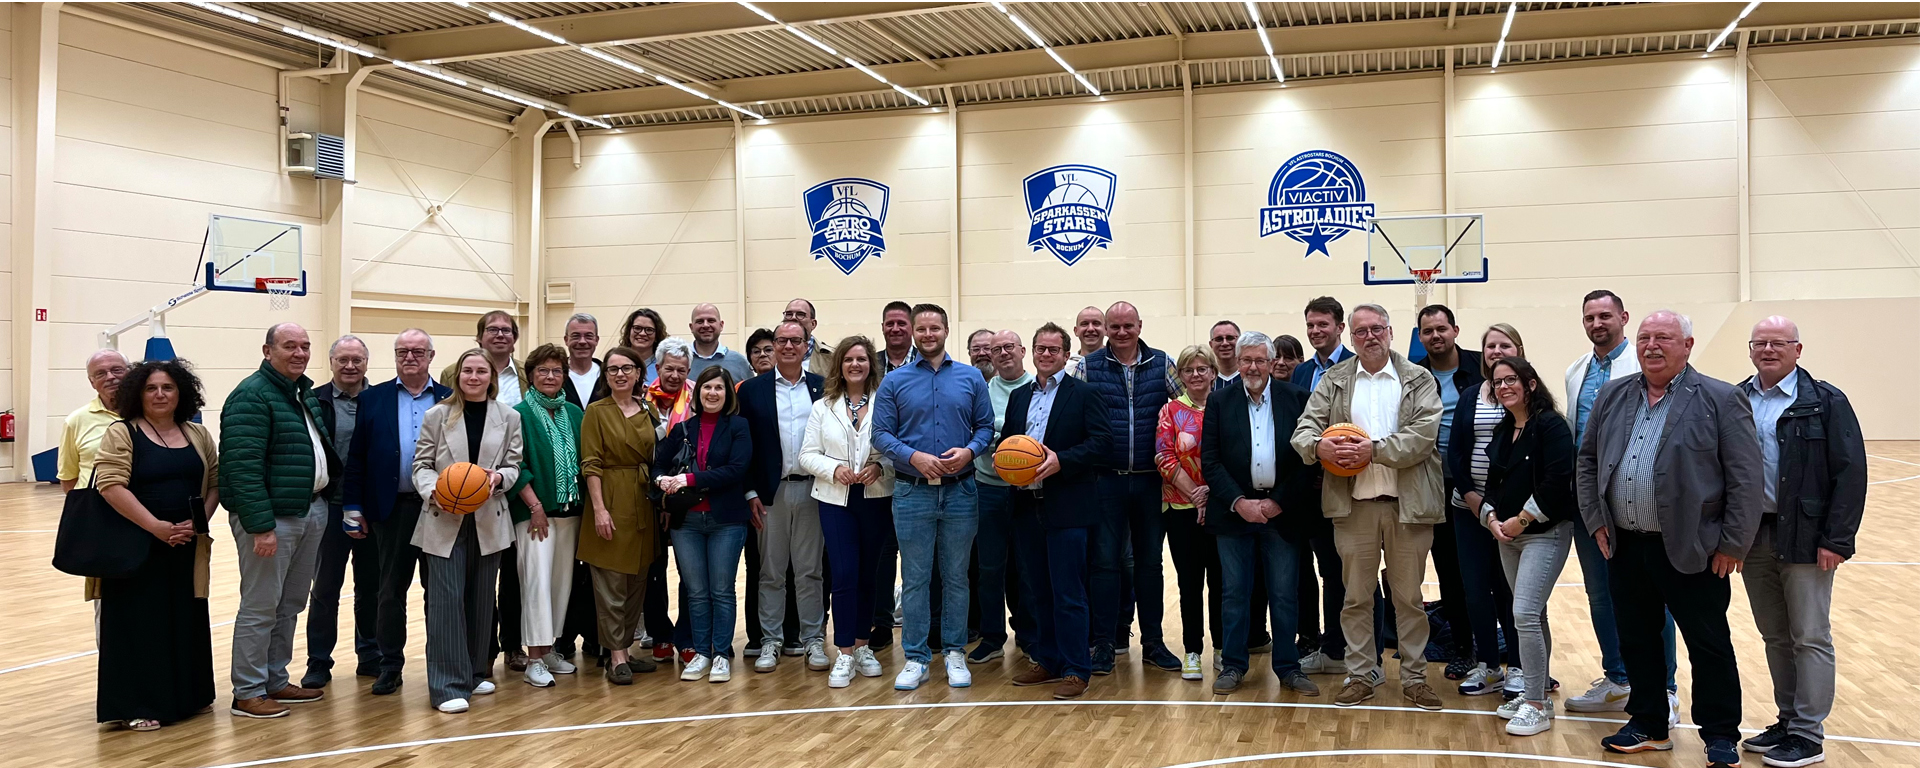 CDU-Fraktion in Basketballhalle